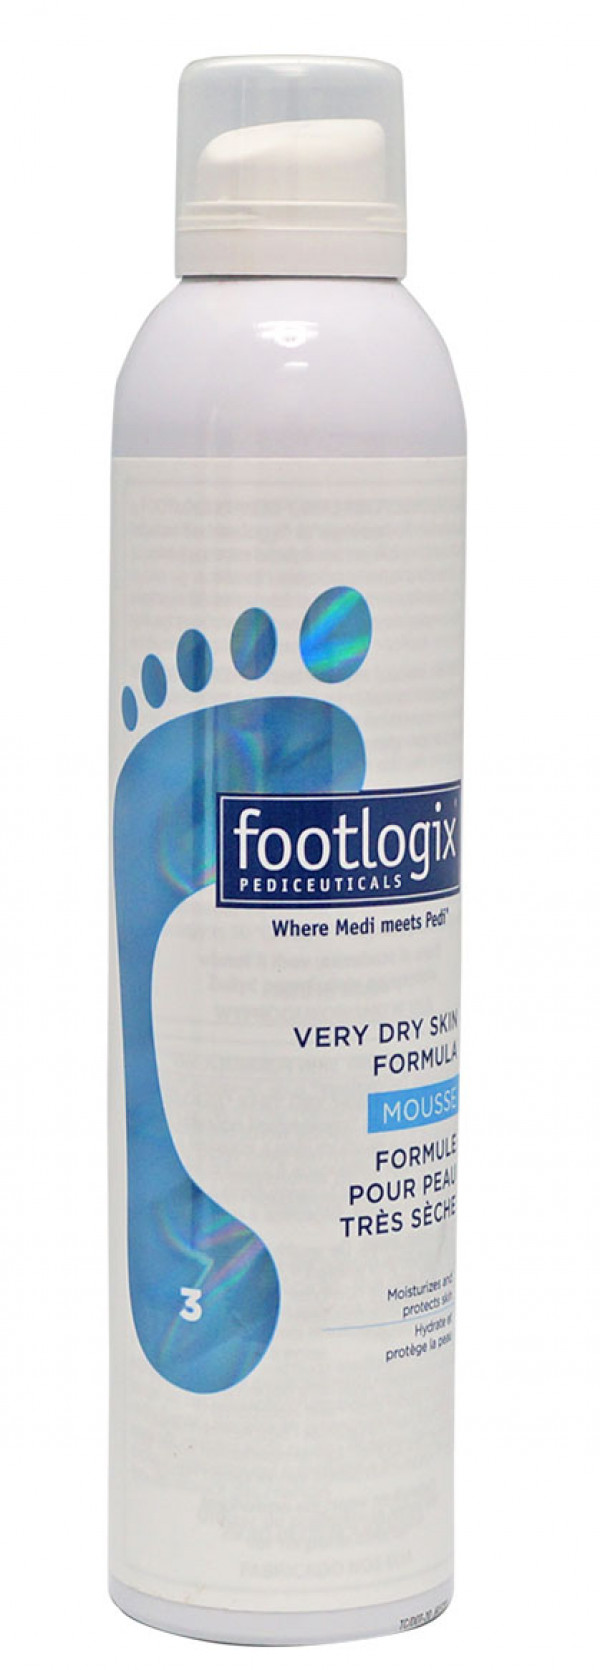 Footlogix 3 Very Dry Skin Formula 300 ml